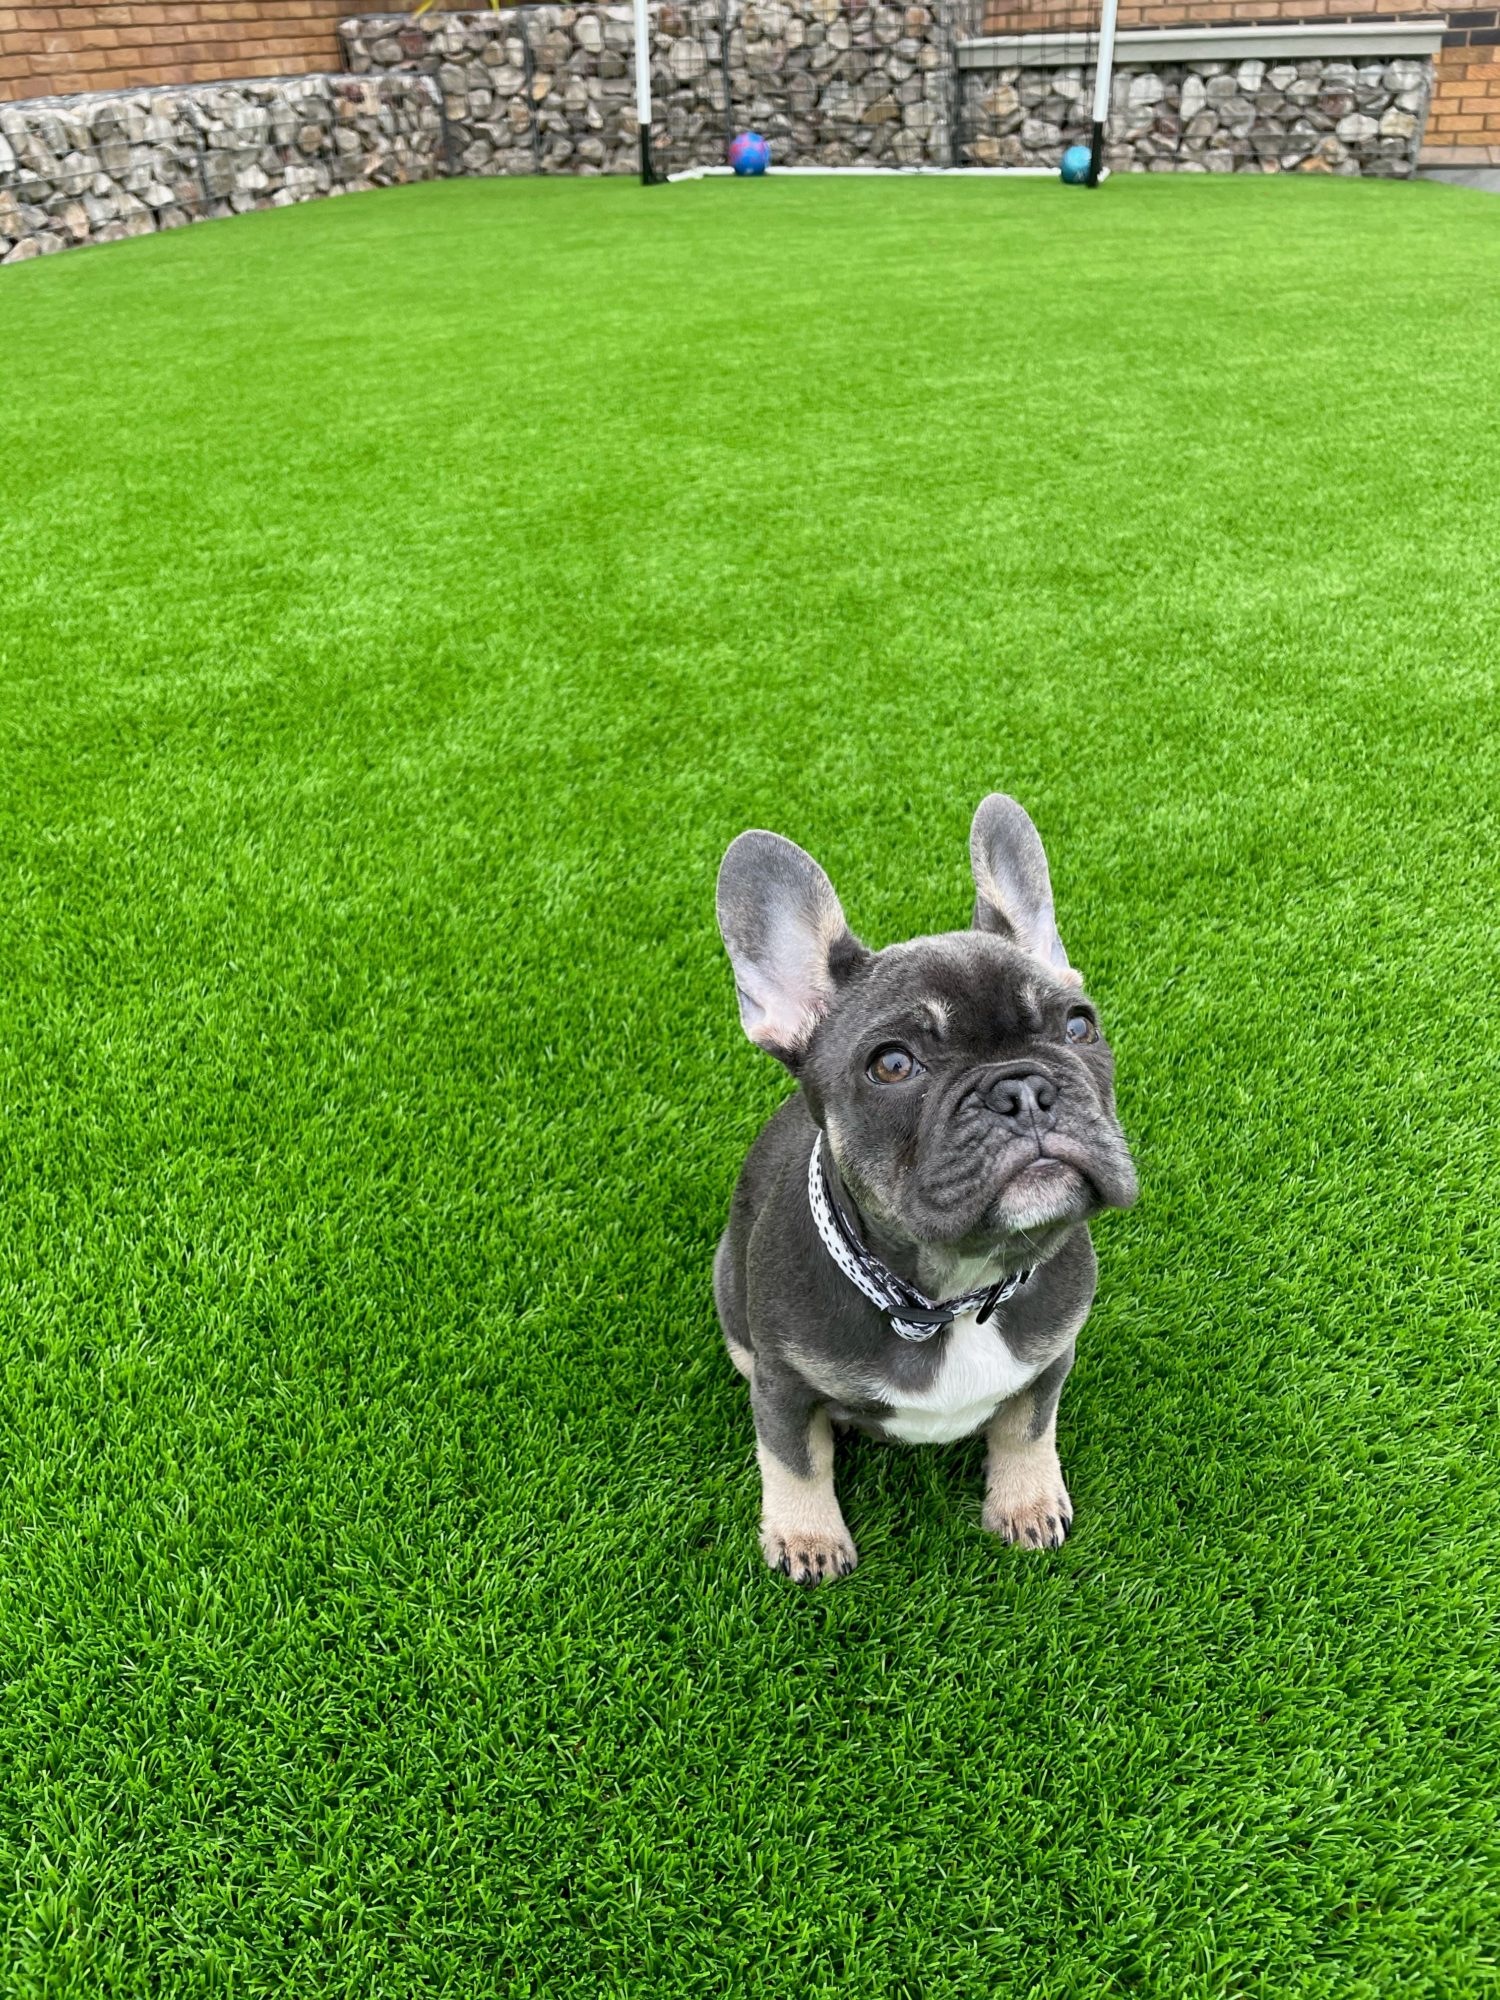 LazyLawn artificial grass is dog friendly